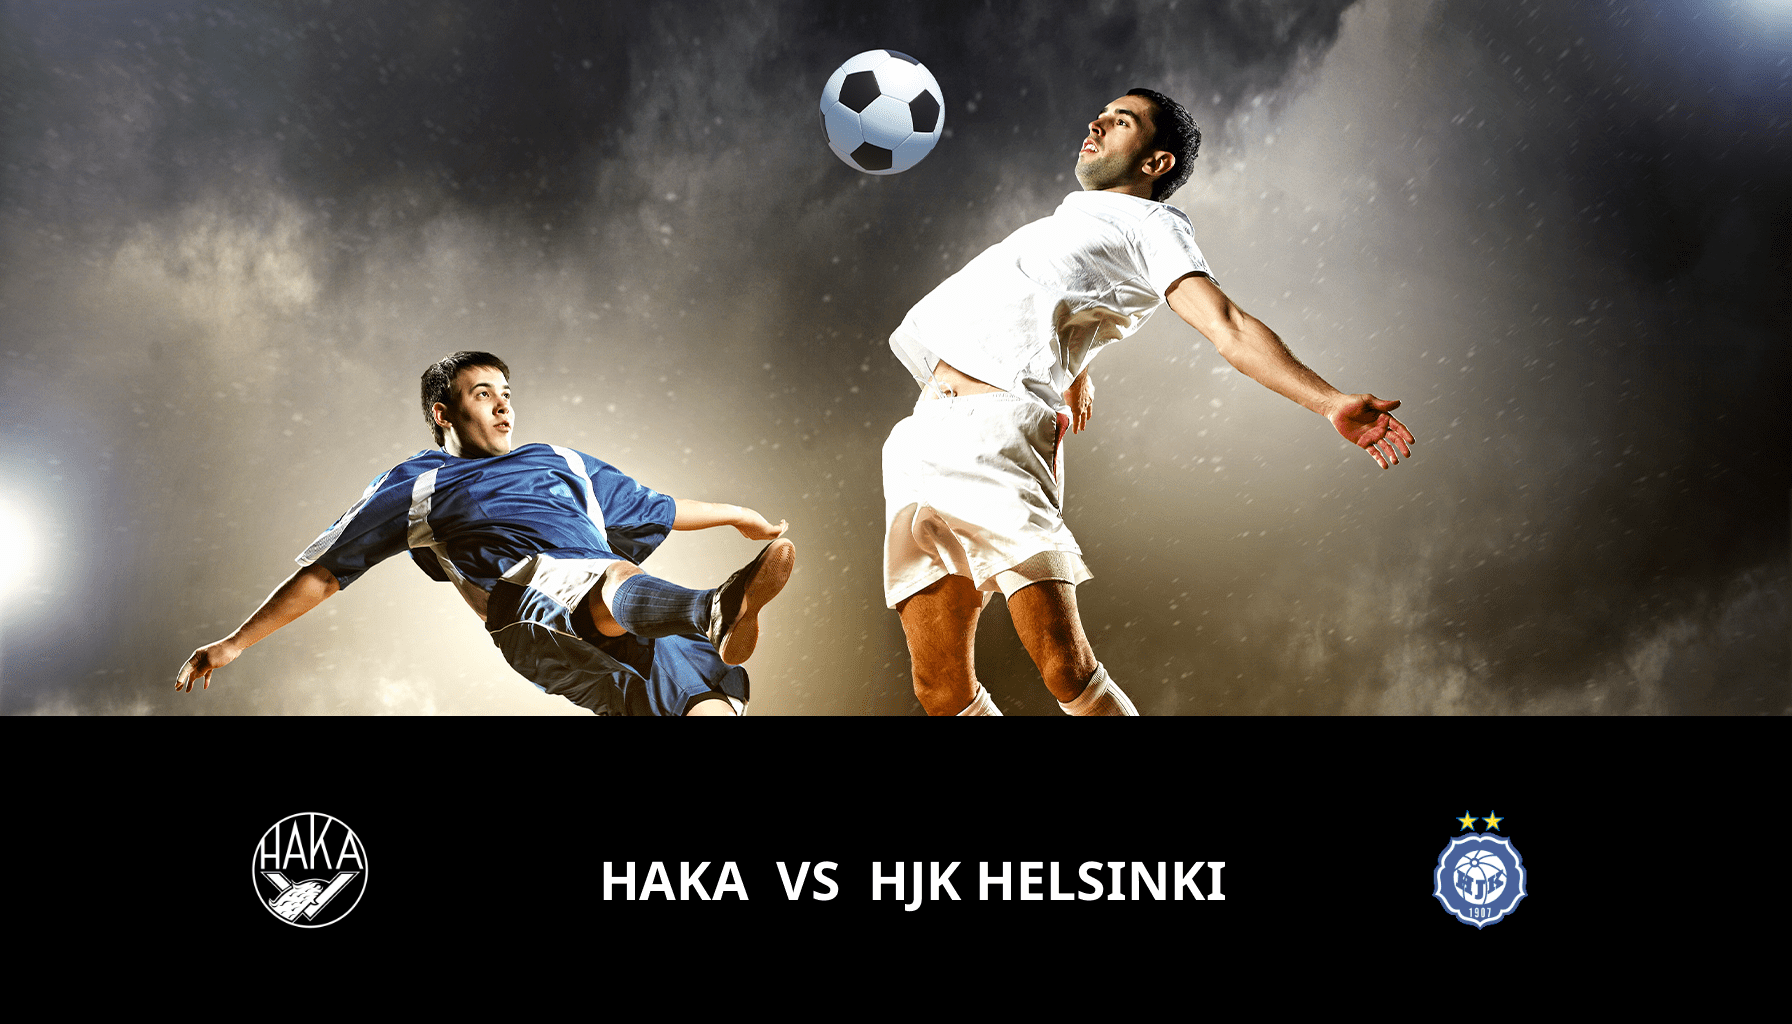 Previsione per haka VS HJK helsinki il 27/04/2024 Analysis of the match